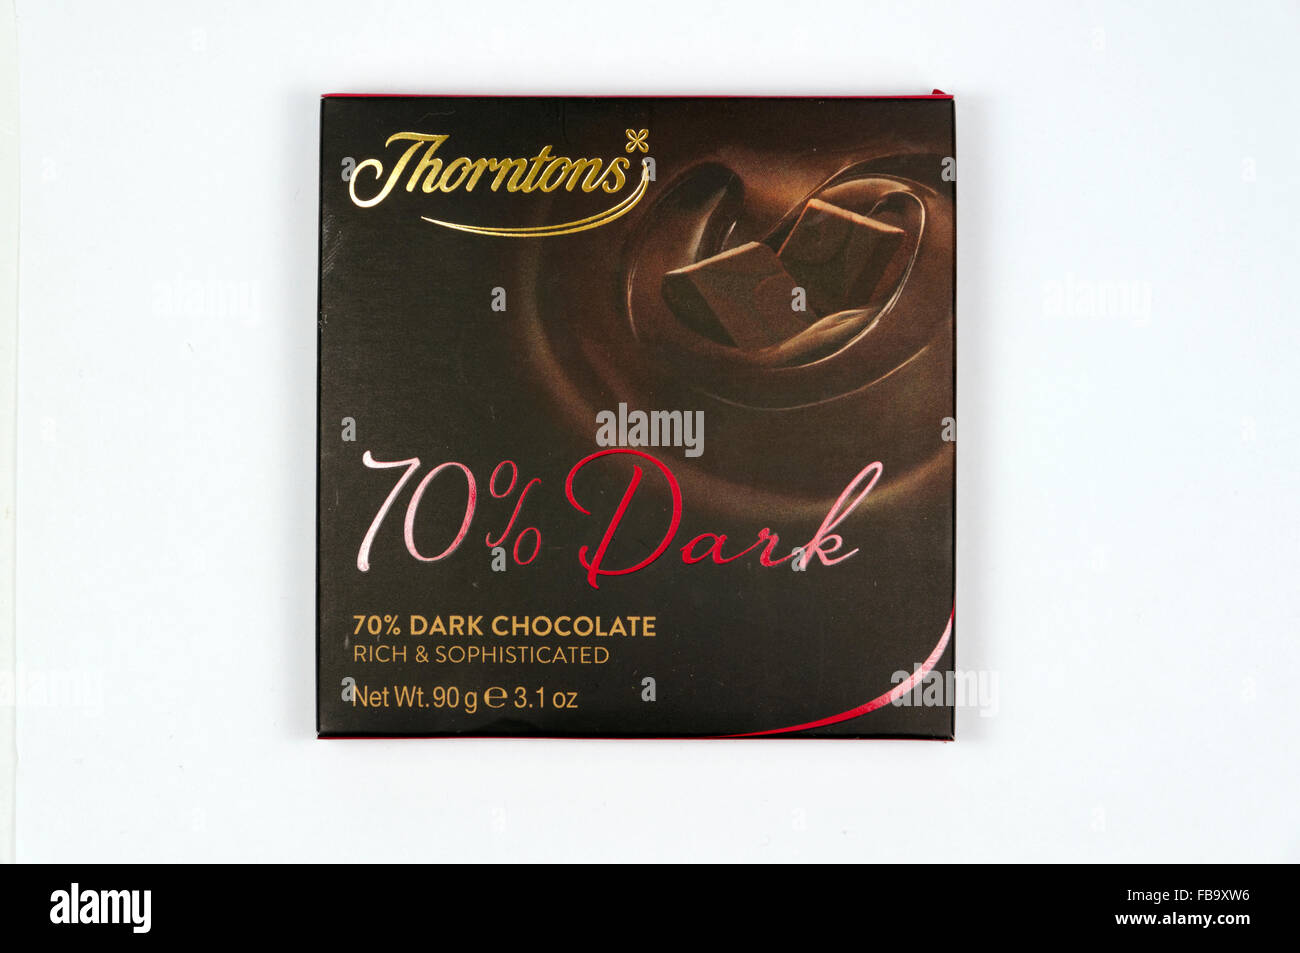 Thorntons 70% Dark chocolate bar. Stock Photo